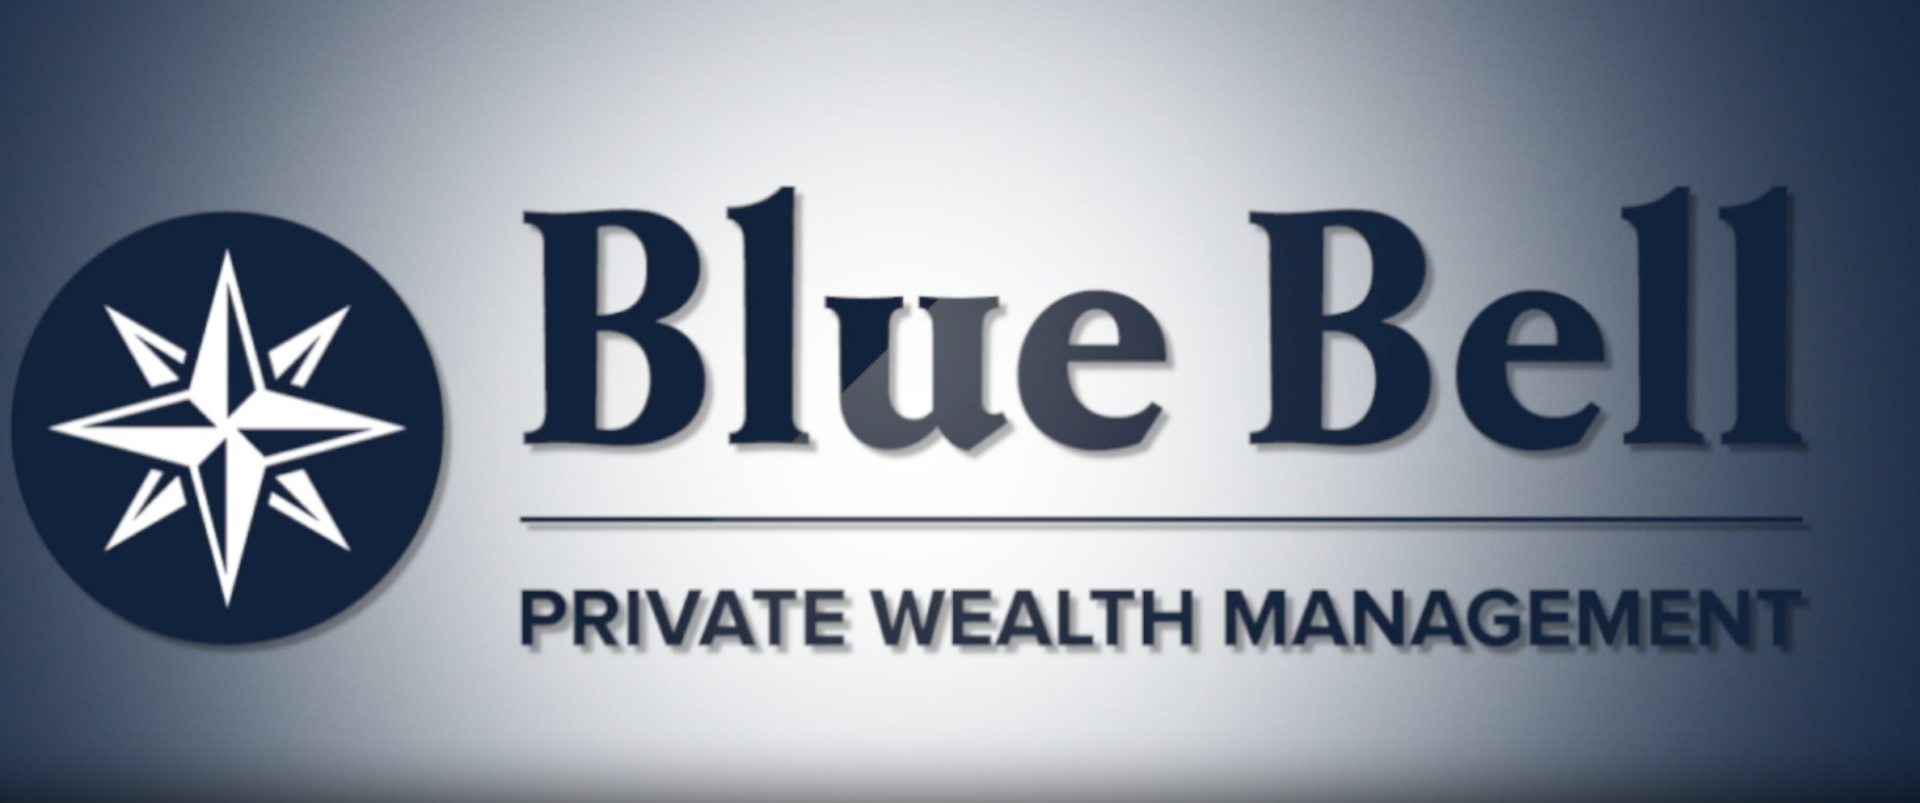 bluebell capital partners logo